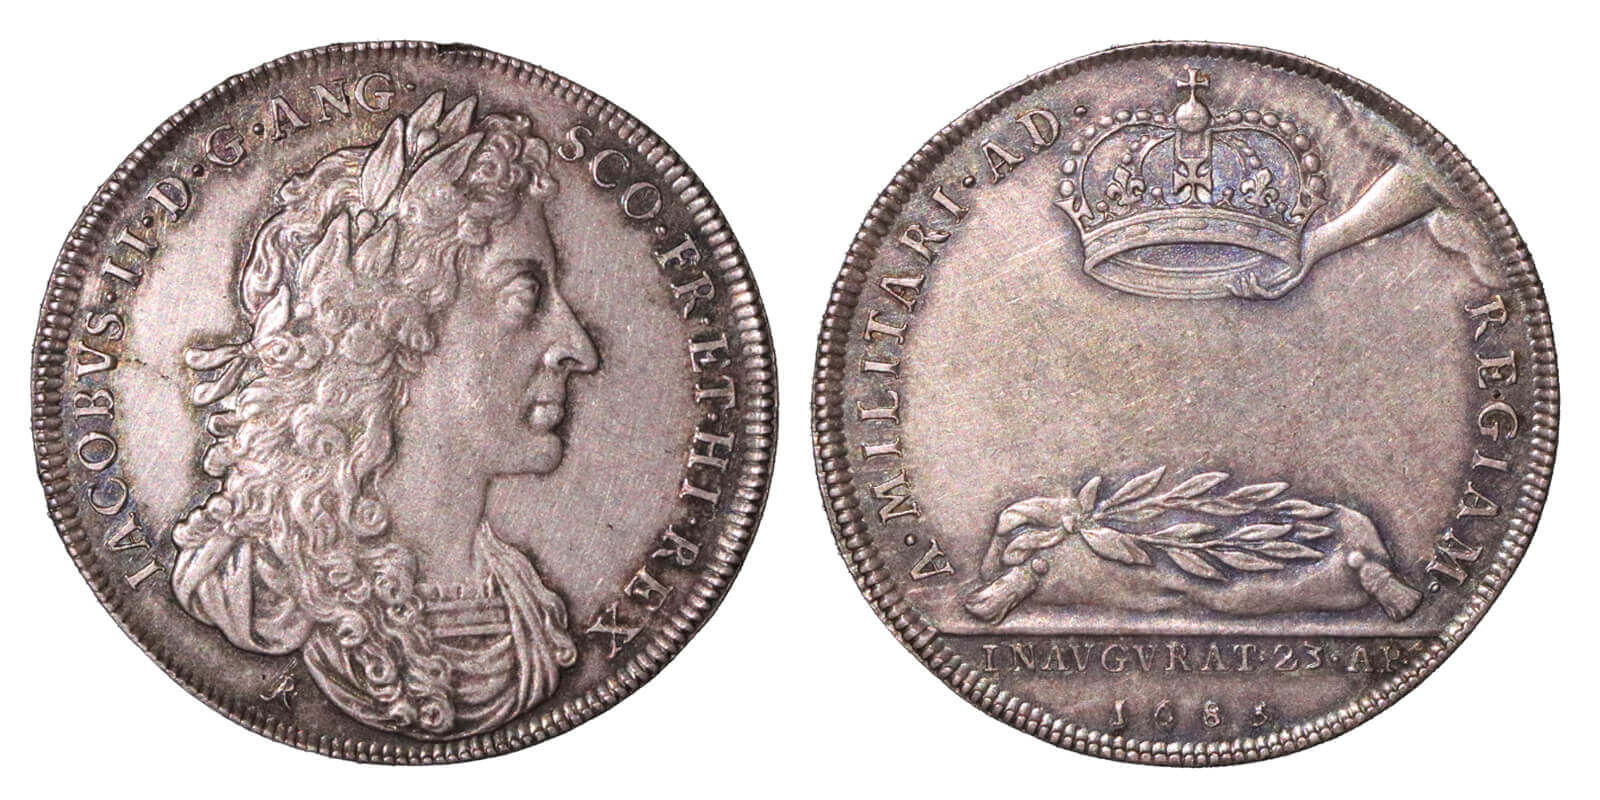 James II coronation medal.jpg